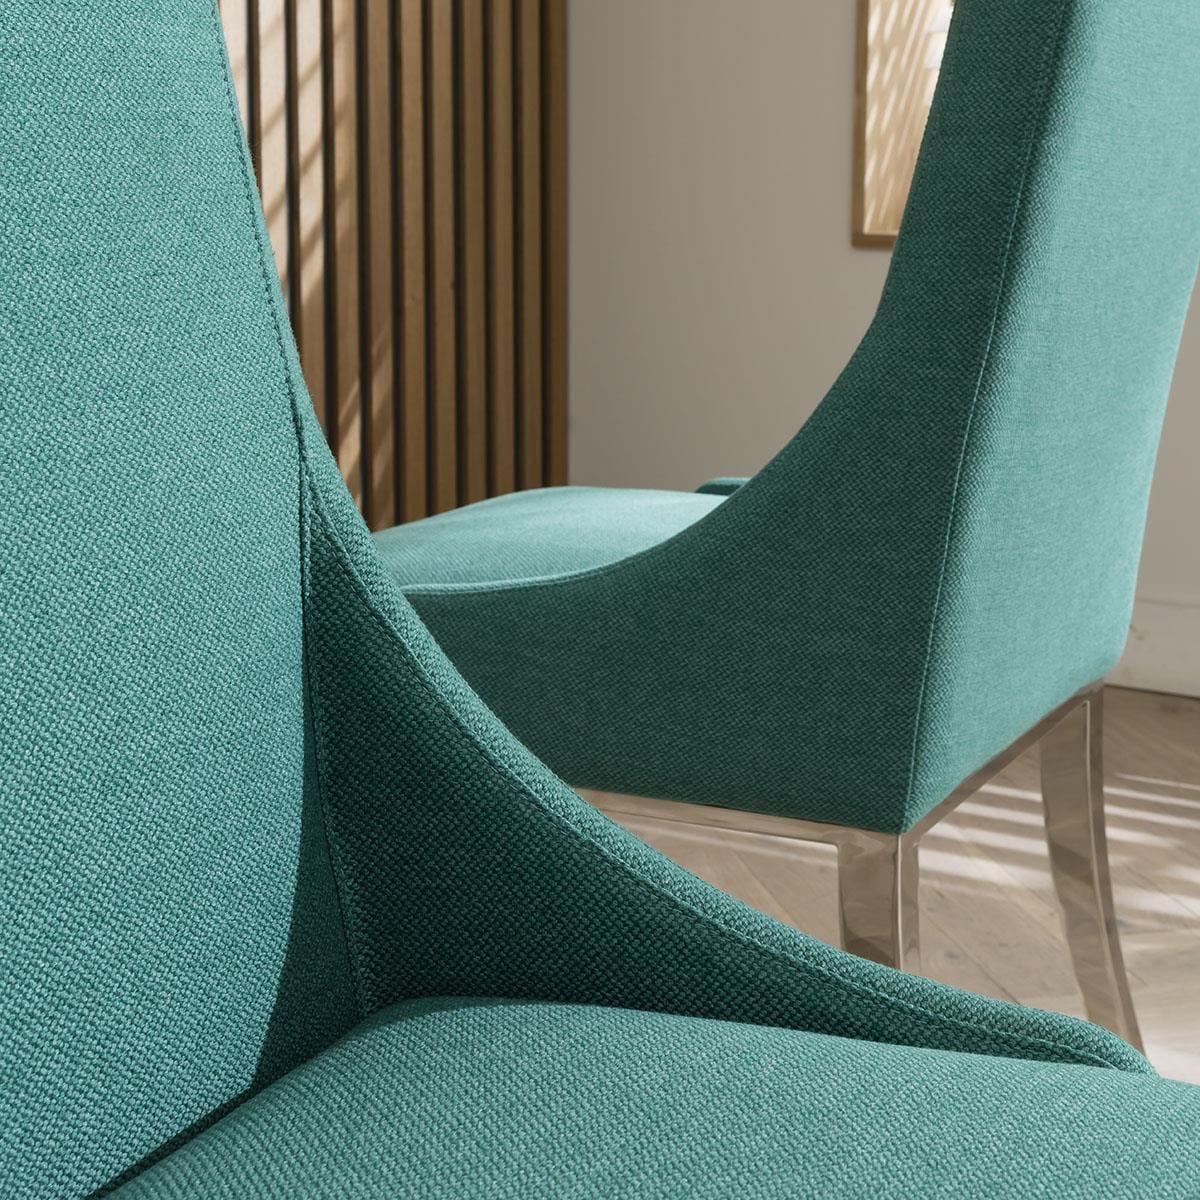 Quatropi Set of 2 Elegant High Back Dining Chairs Green Fabric - Polished Metal Legs